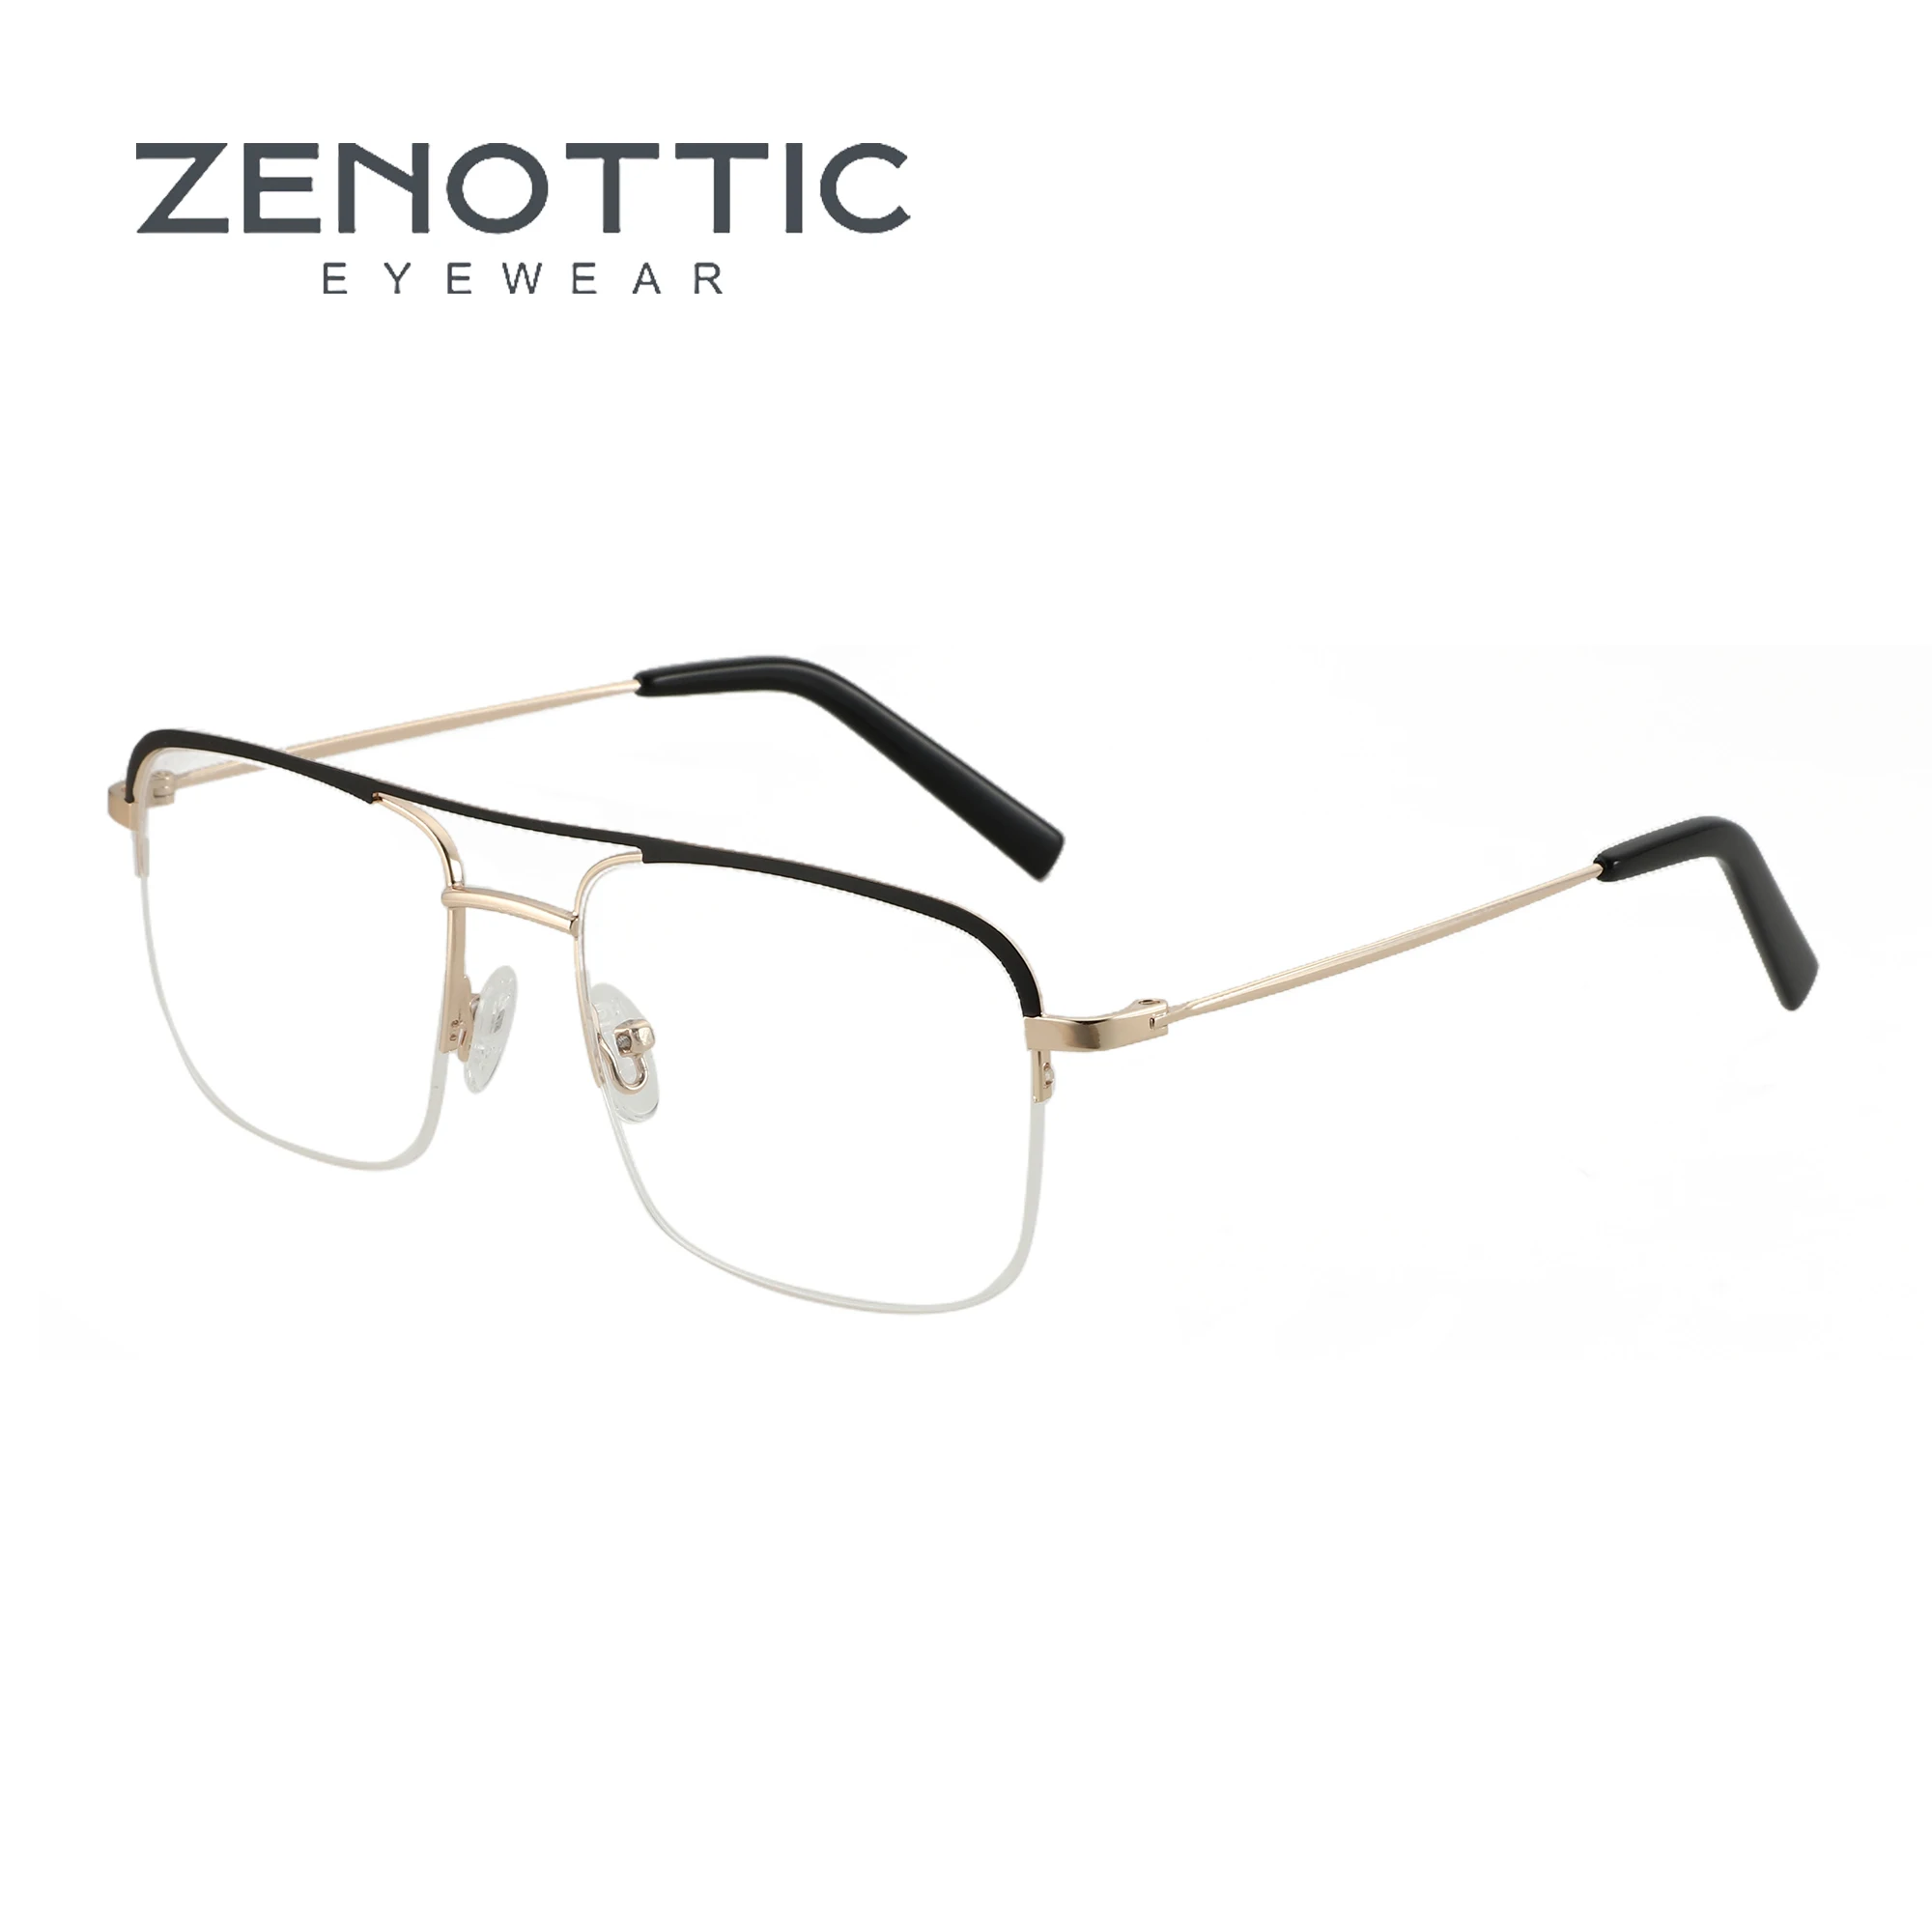 

ZENOTTIC New Fashion Pilot Optical Glasses Double Bridge Eyewear Men Non-Prescription Square Ultra Light Metals Eyeglasses H3103